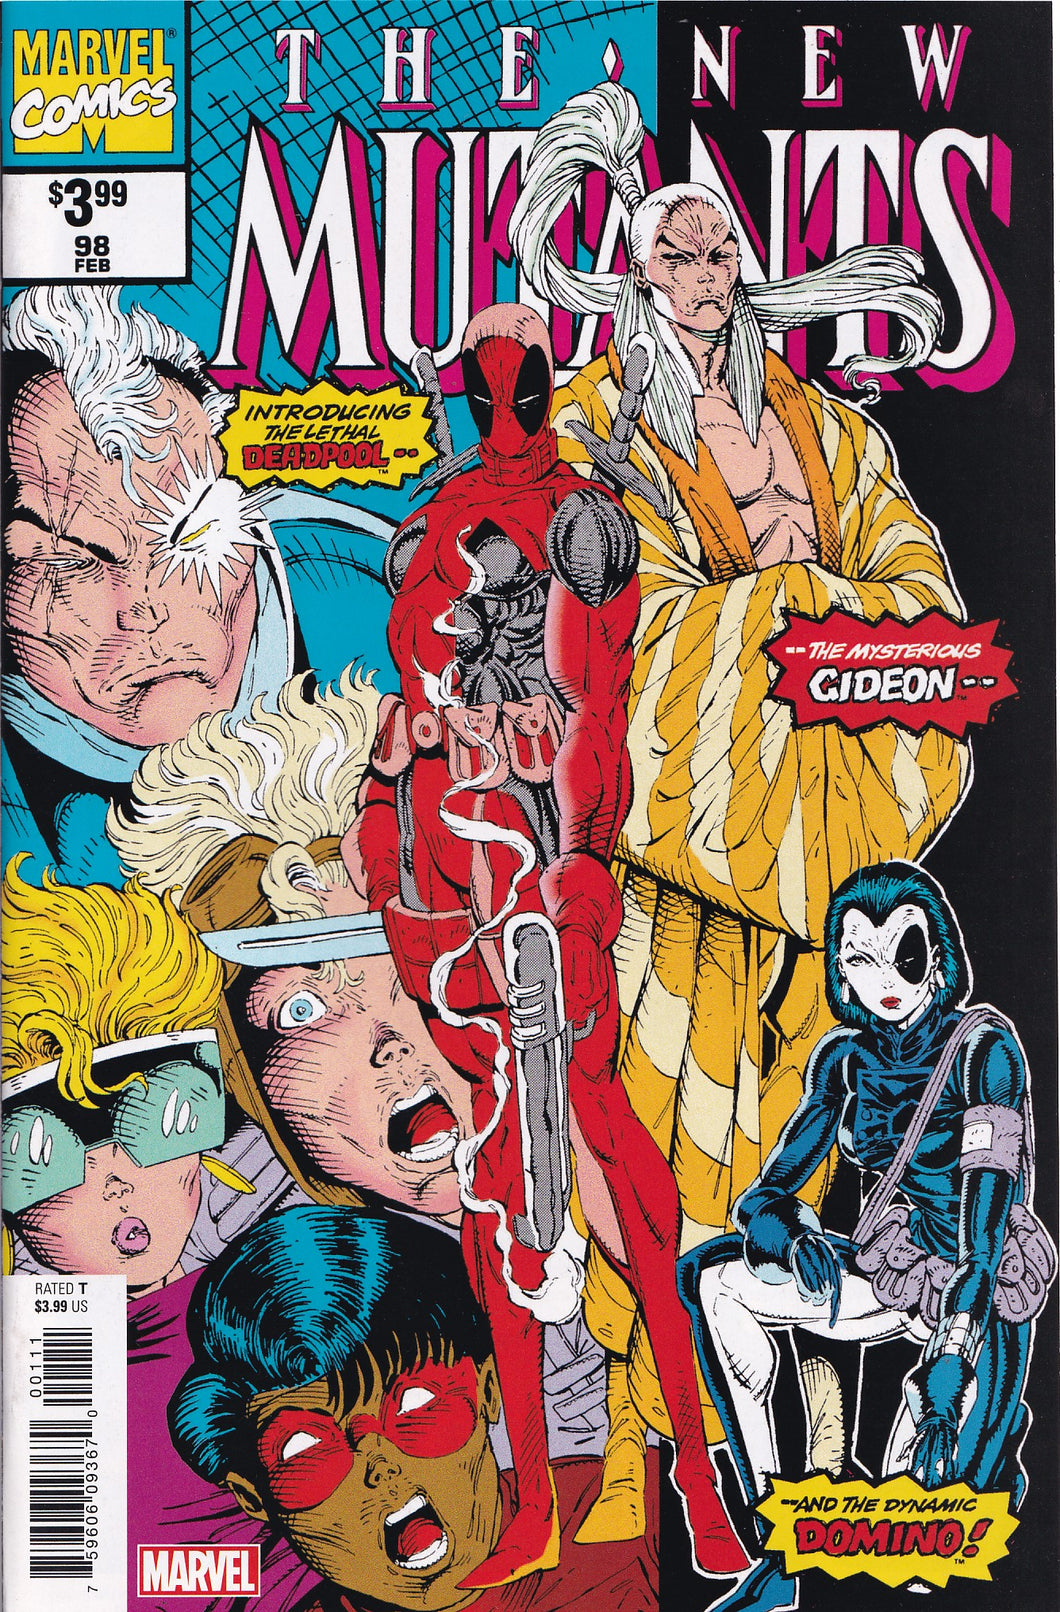 NEW MUTANTS #98 (2019 FACSIMILE VARIANT) COMIC BOOK ~ Marvel Comics